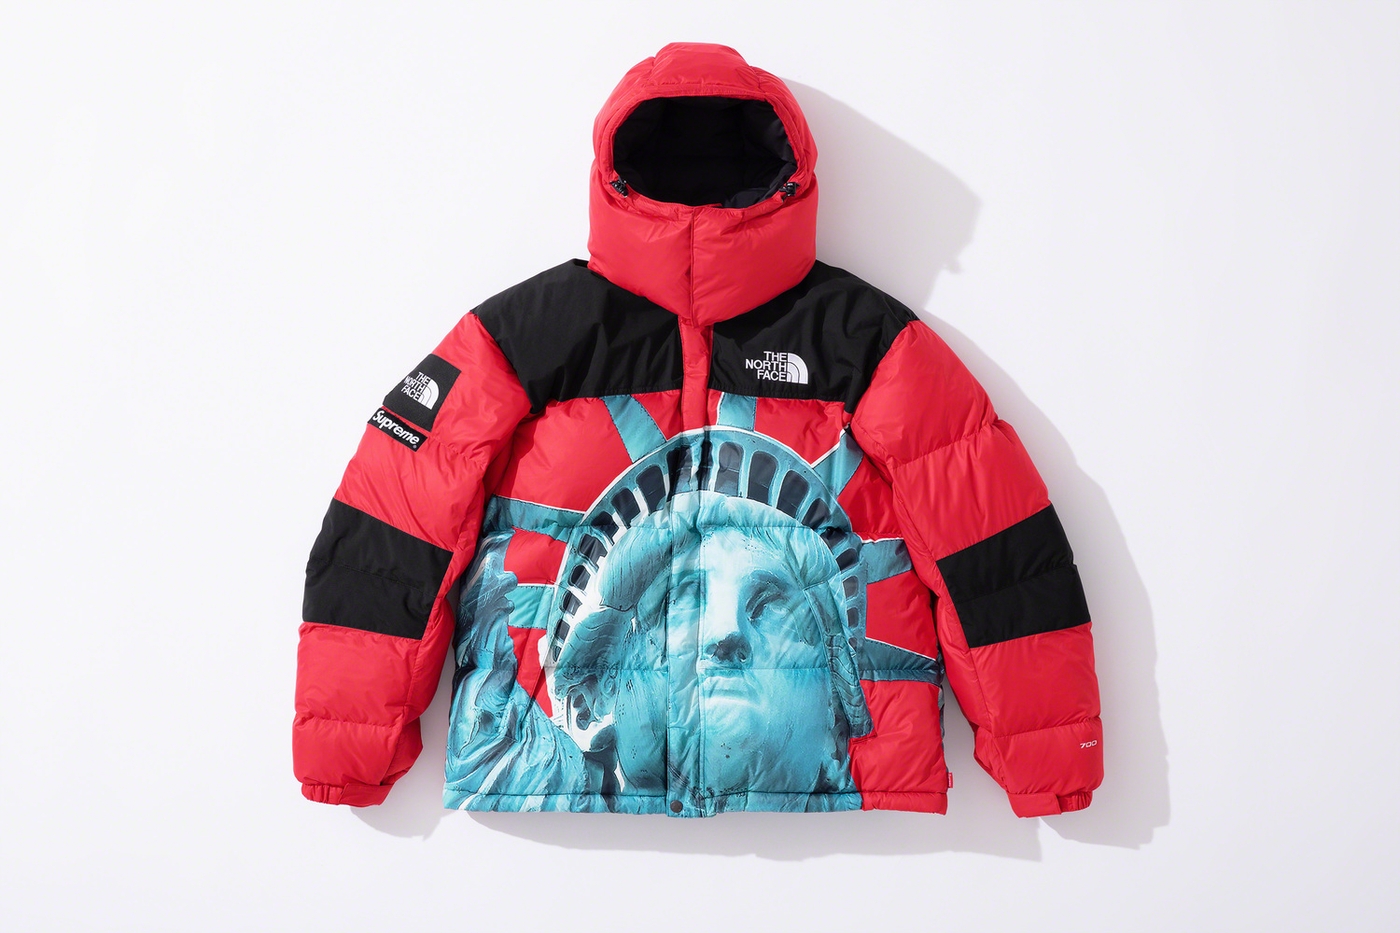 Statue of Liberty Baltoro Jacket with packable hood. (9/29)